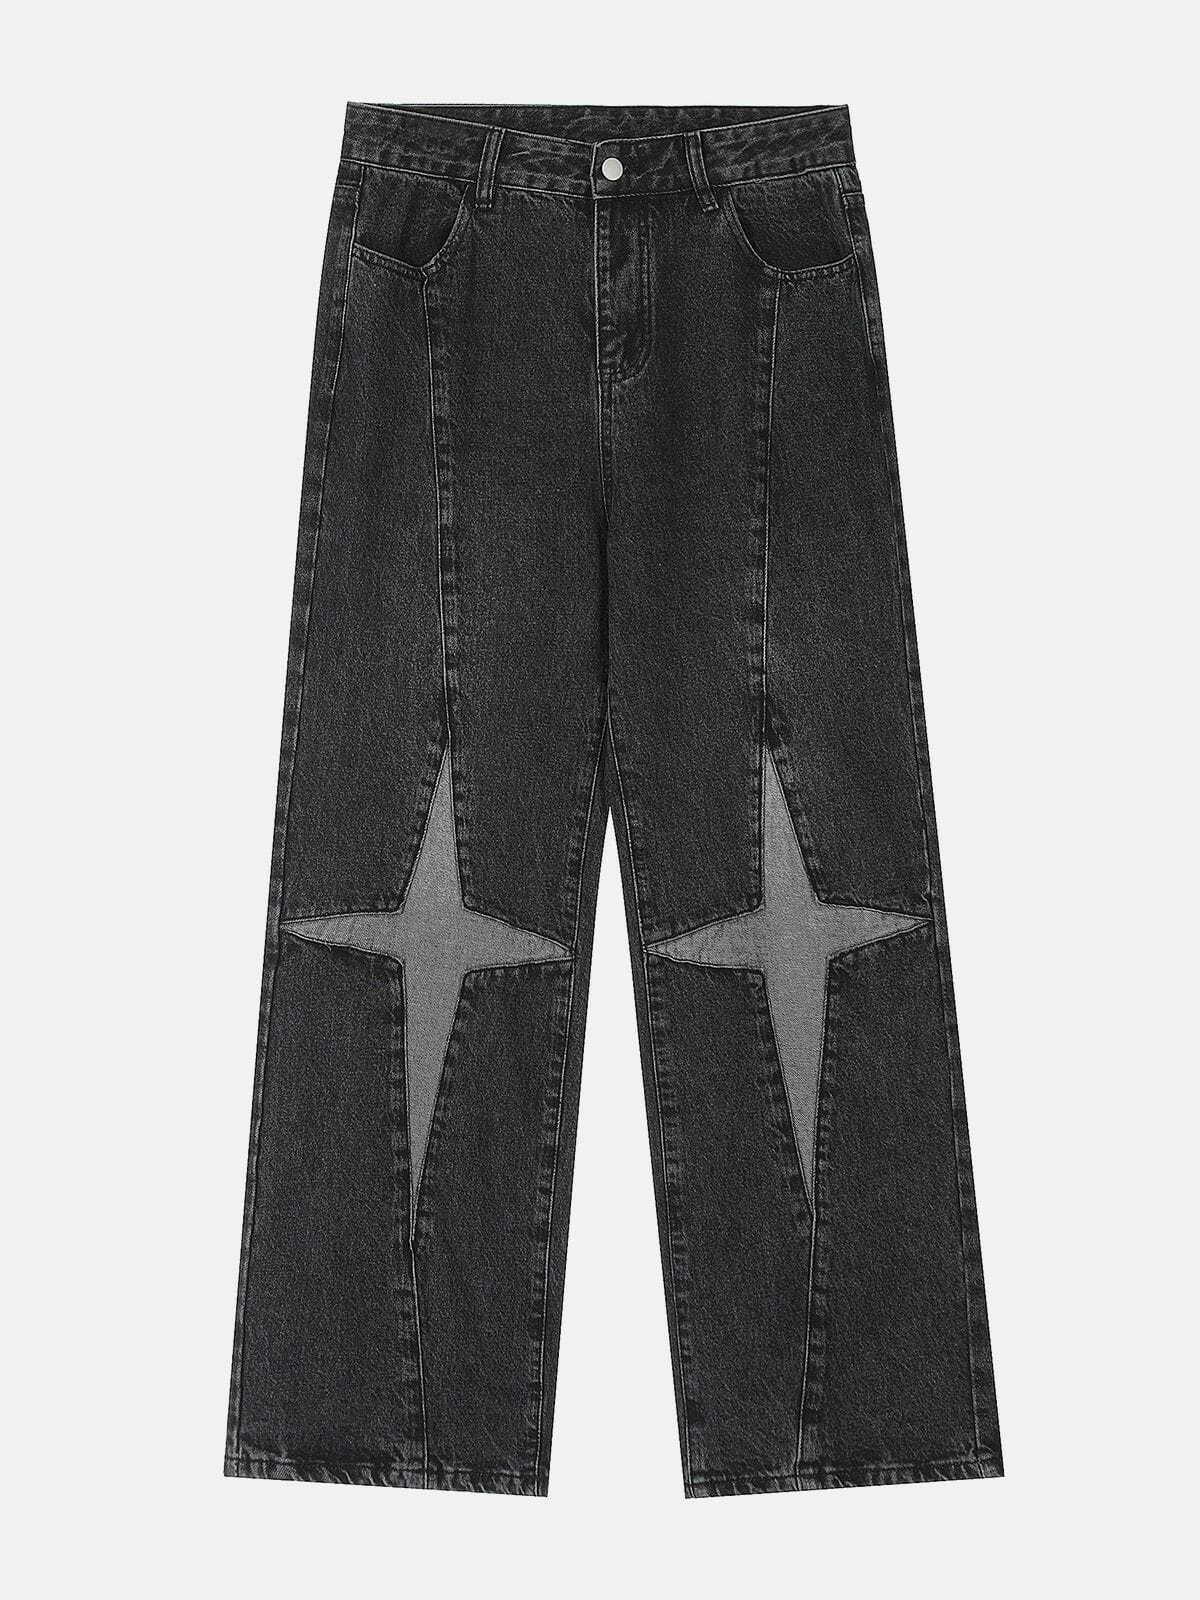 diamond star applique jeans   edgy & retro streetwear 3907